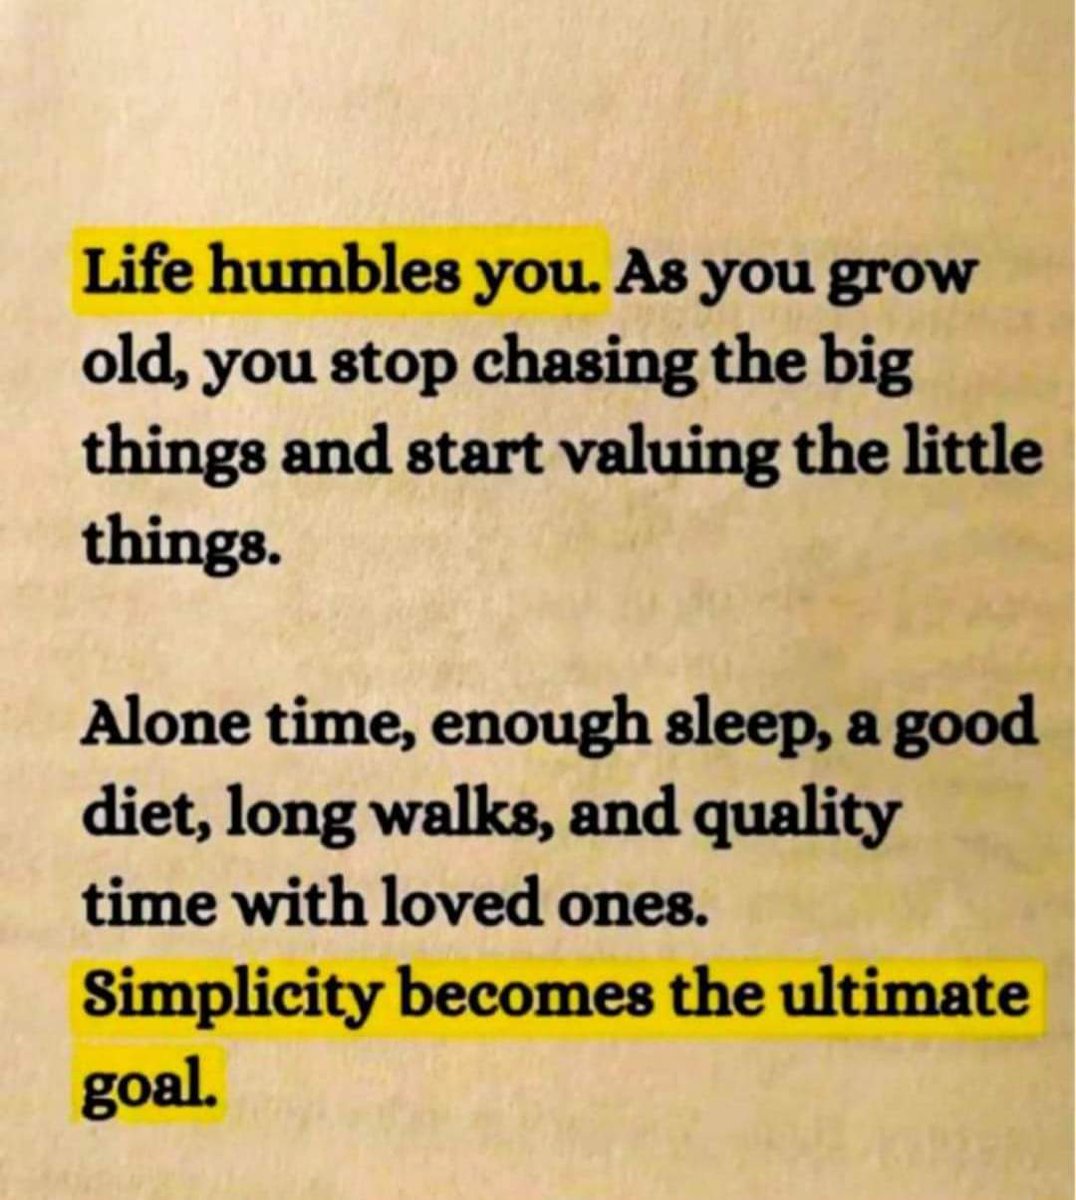 #Life #Humble #Love❤️ #Kindness 🌺🙏